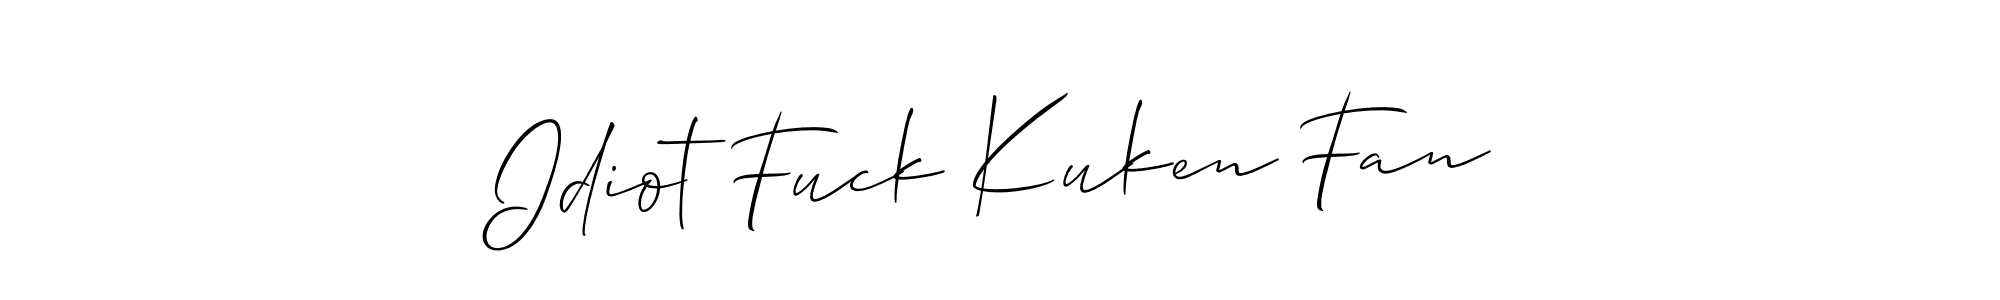 How to Draw Idiot Fuck Kuken Fan signature style? Allison_Script is a latest design signature styles for name Idiot Fuck Kuken Fan. Idiot Fuck Kuken Fan signature style 2 images and pictures png